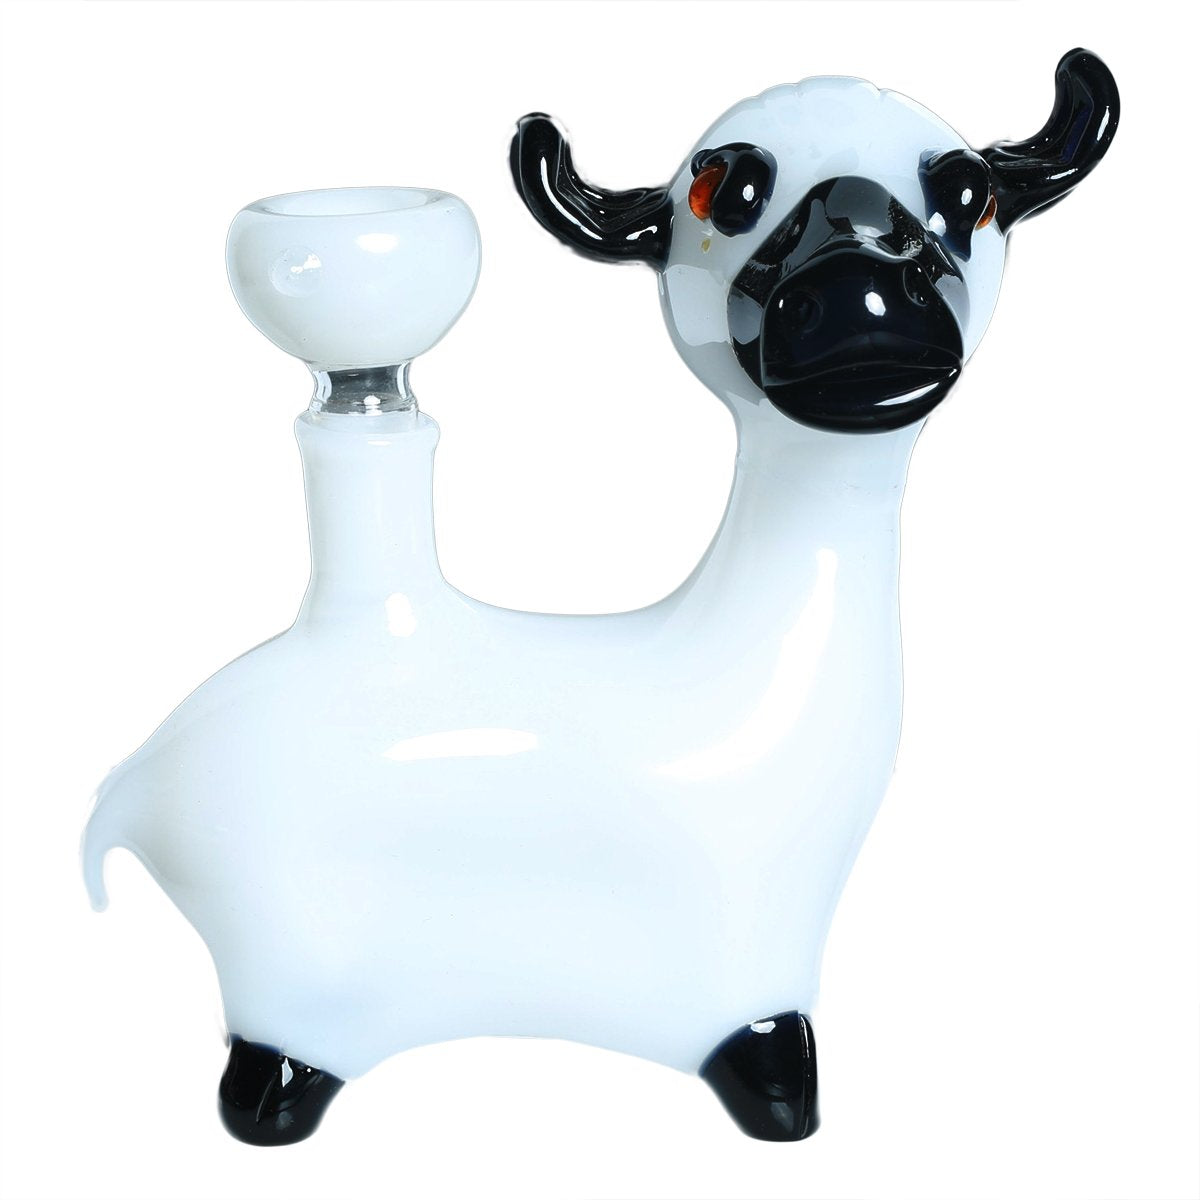 White and Black Cow Hand Pipe Marijauna accessories